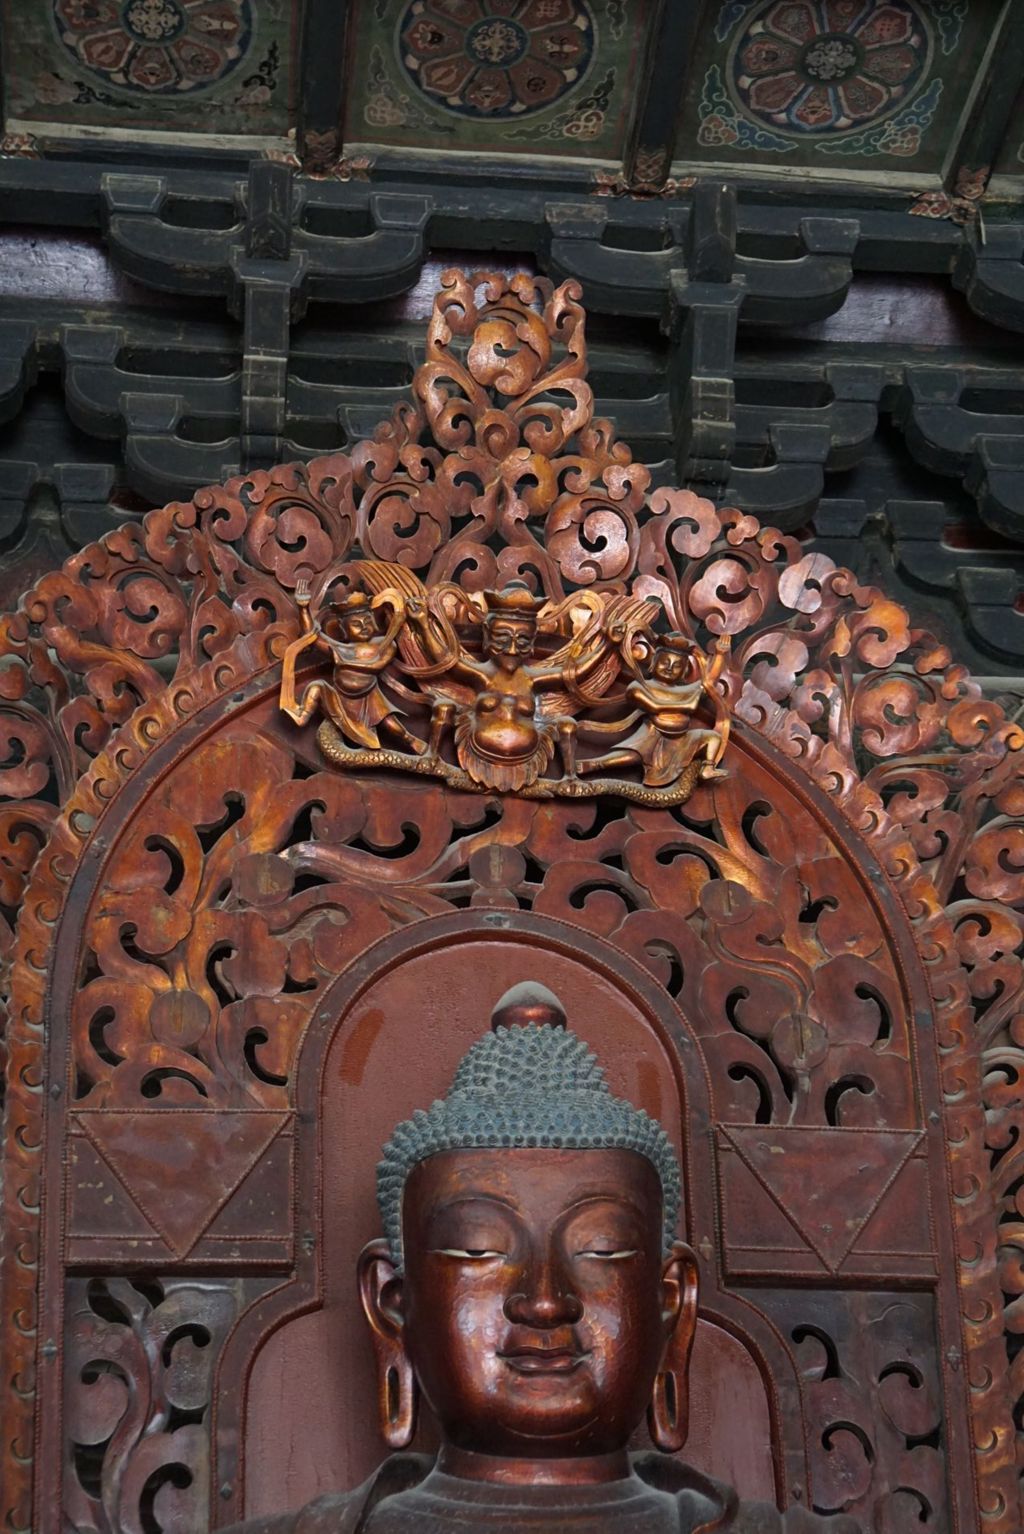 Miniature of Dazhi Hall (Dazhidian, Hall of Great Wisdom), seated bodhisattva